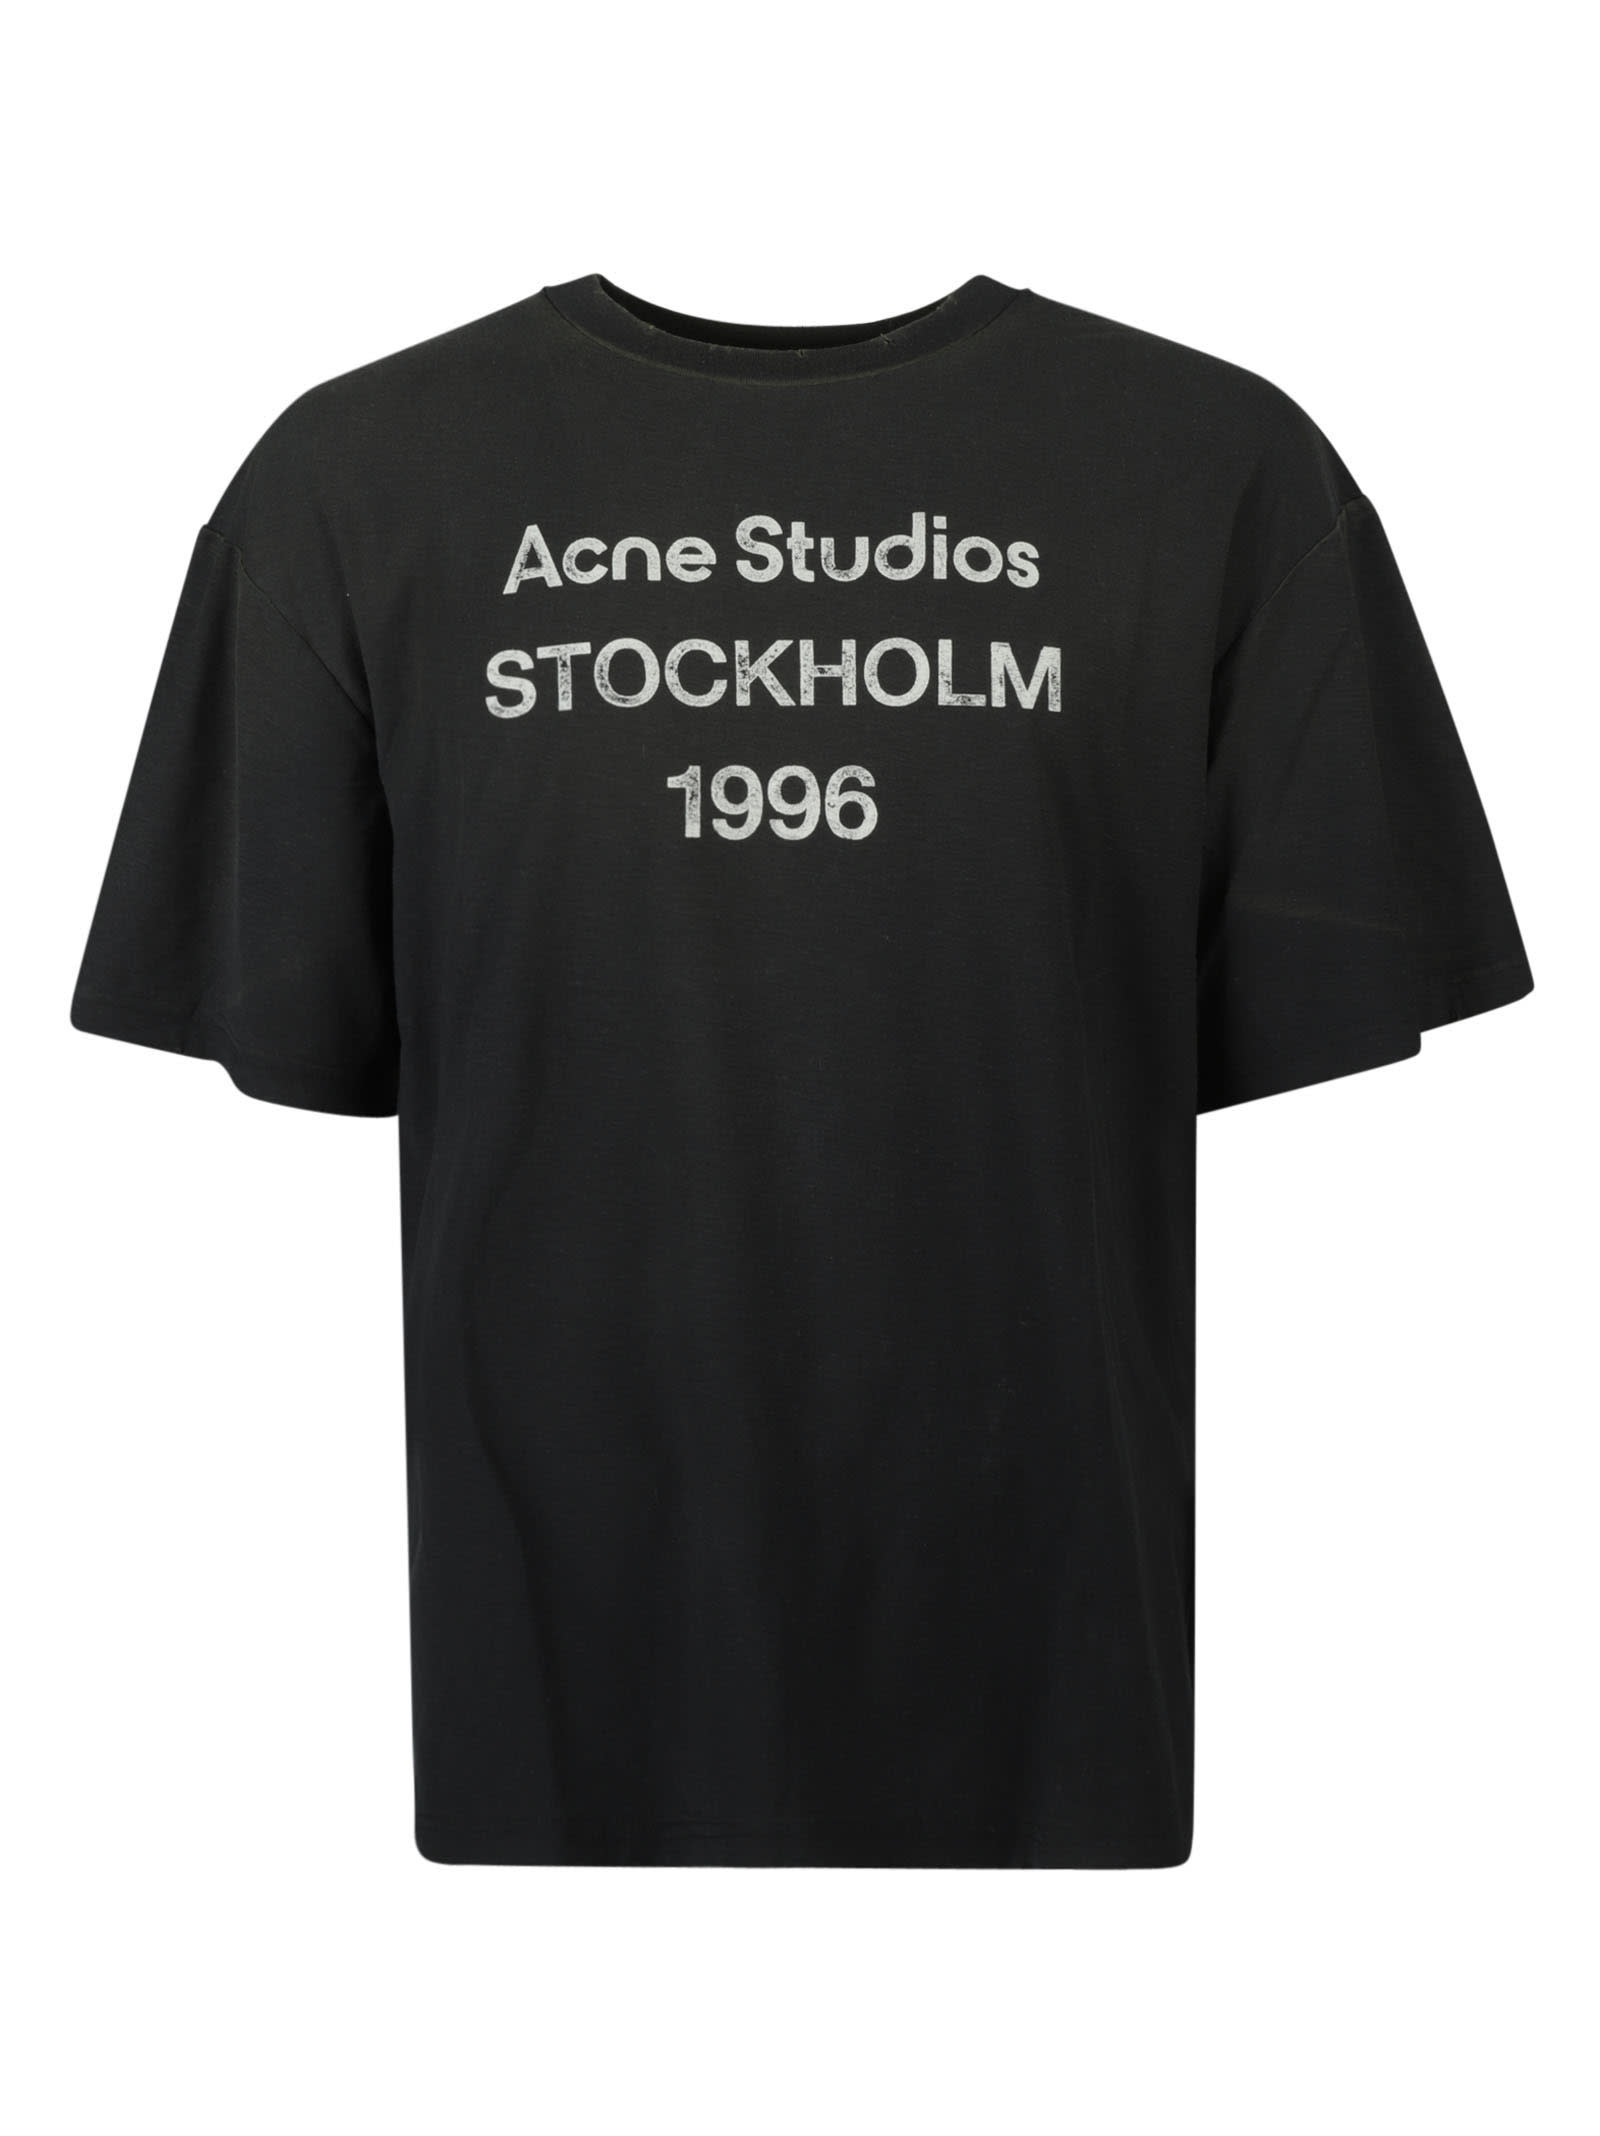 ACNE STUDIOS 1996 LOGO T-SHIRT